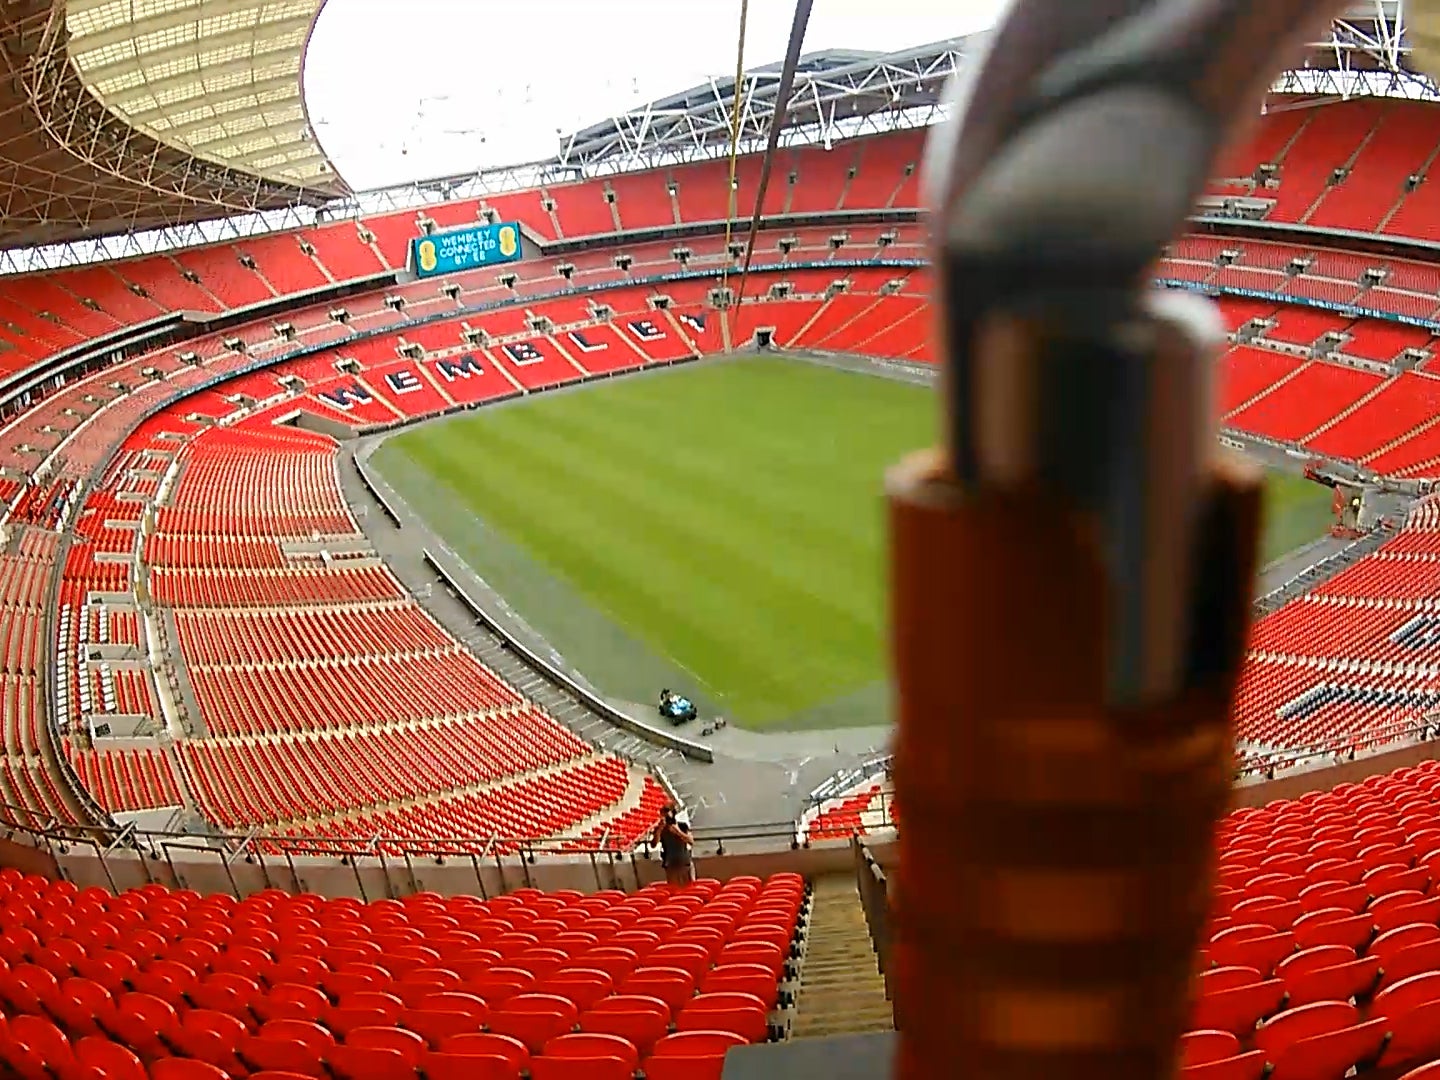 Amazing perspective of Wembley Stadium